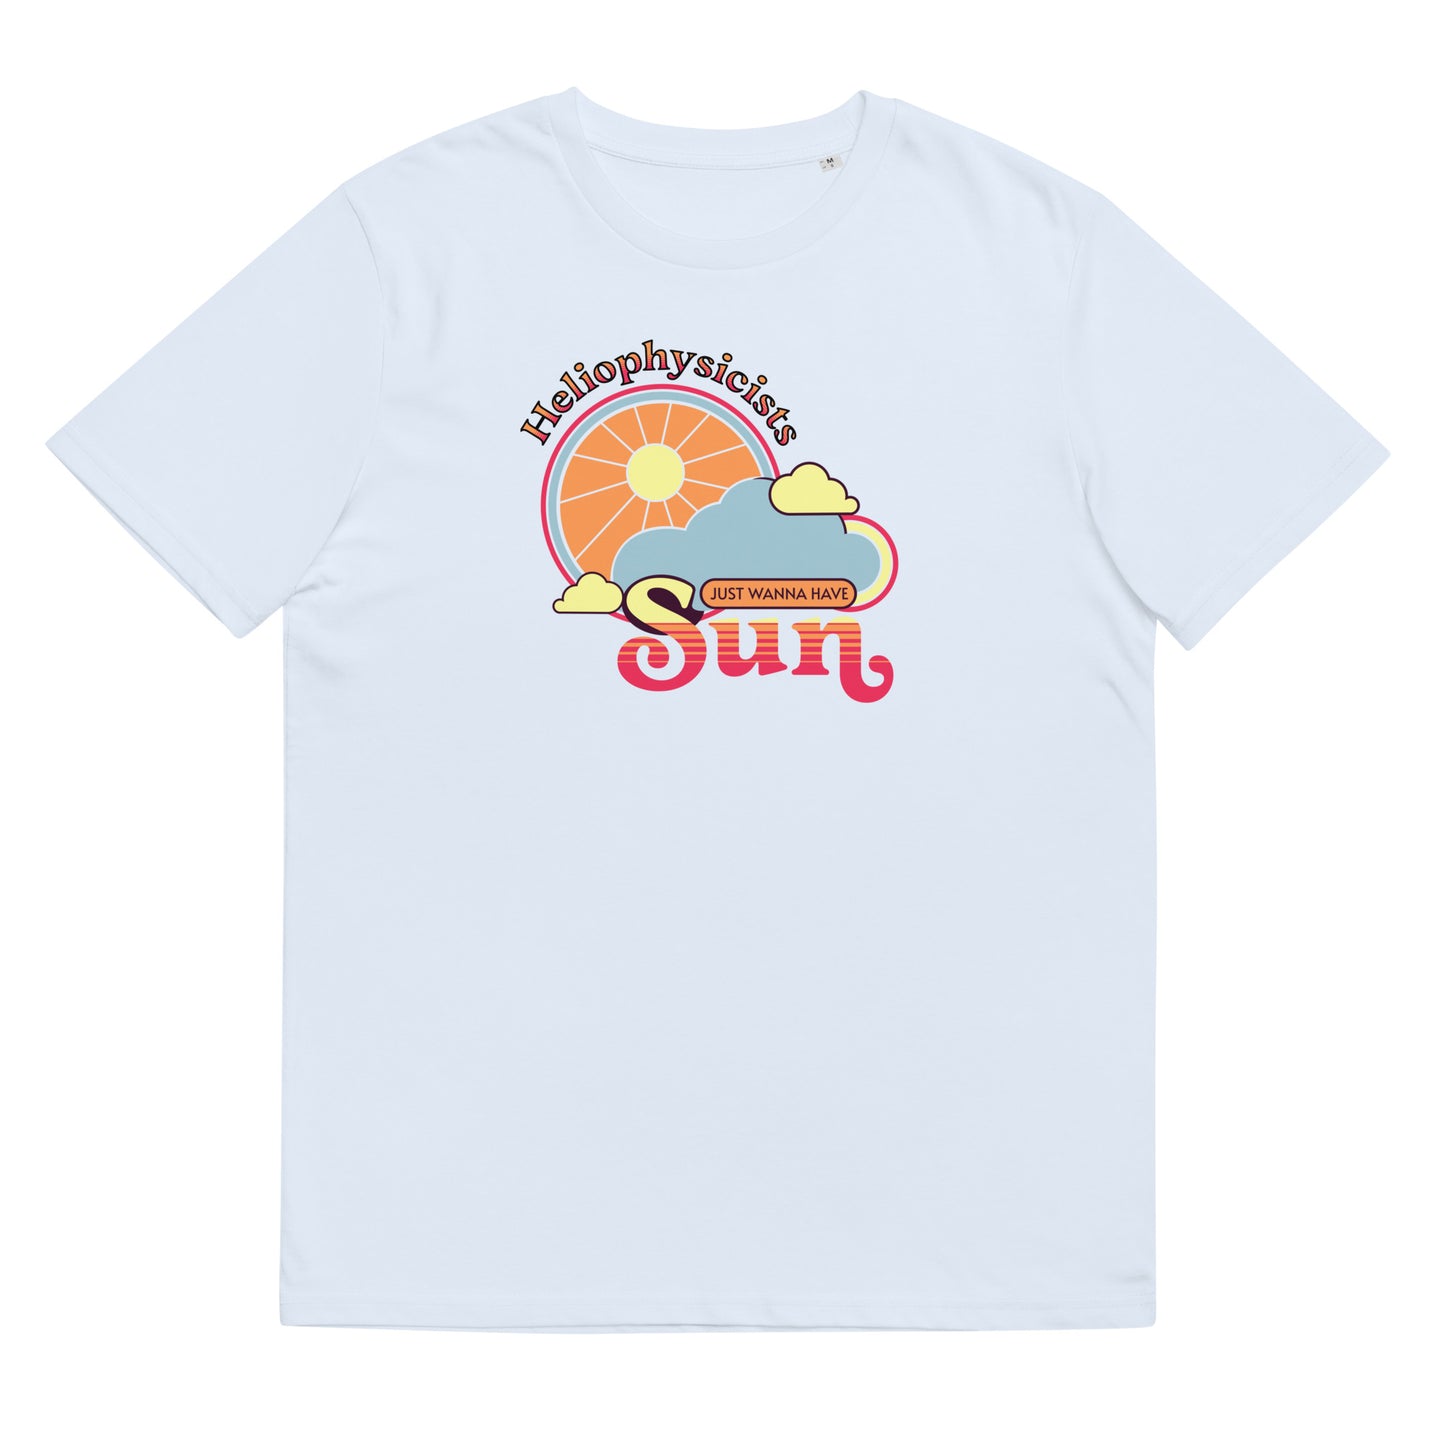 Unisex organic cotton t-shirt, Heliophysicists Just Wanna Have Sun